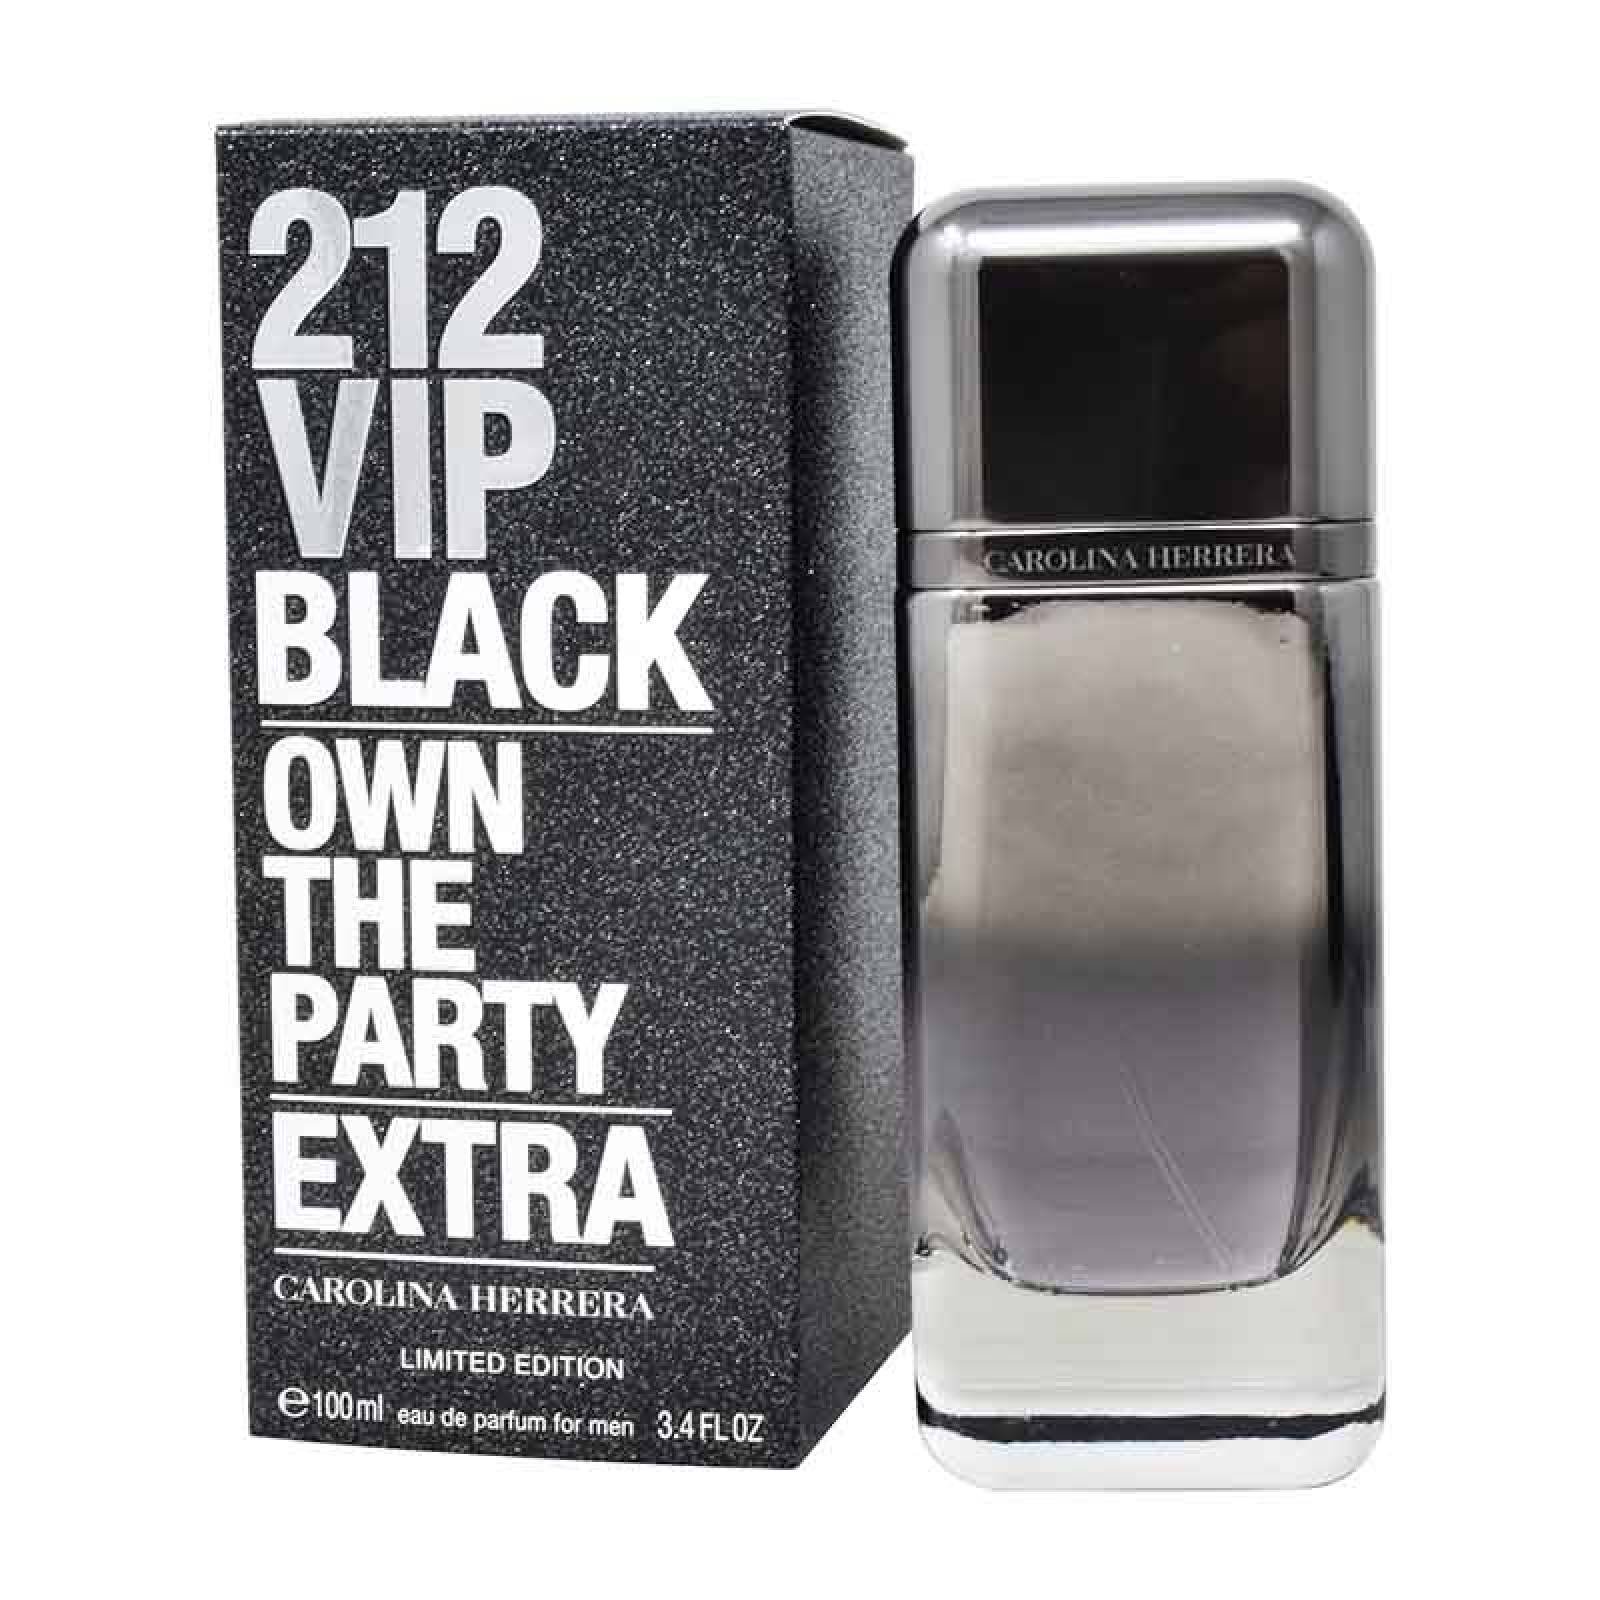 212 Vip Black Own The Party Extra 100 ml Edt Spray de Carolina Herrera